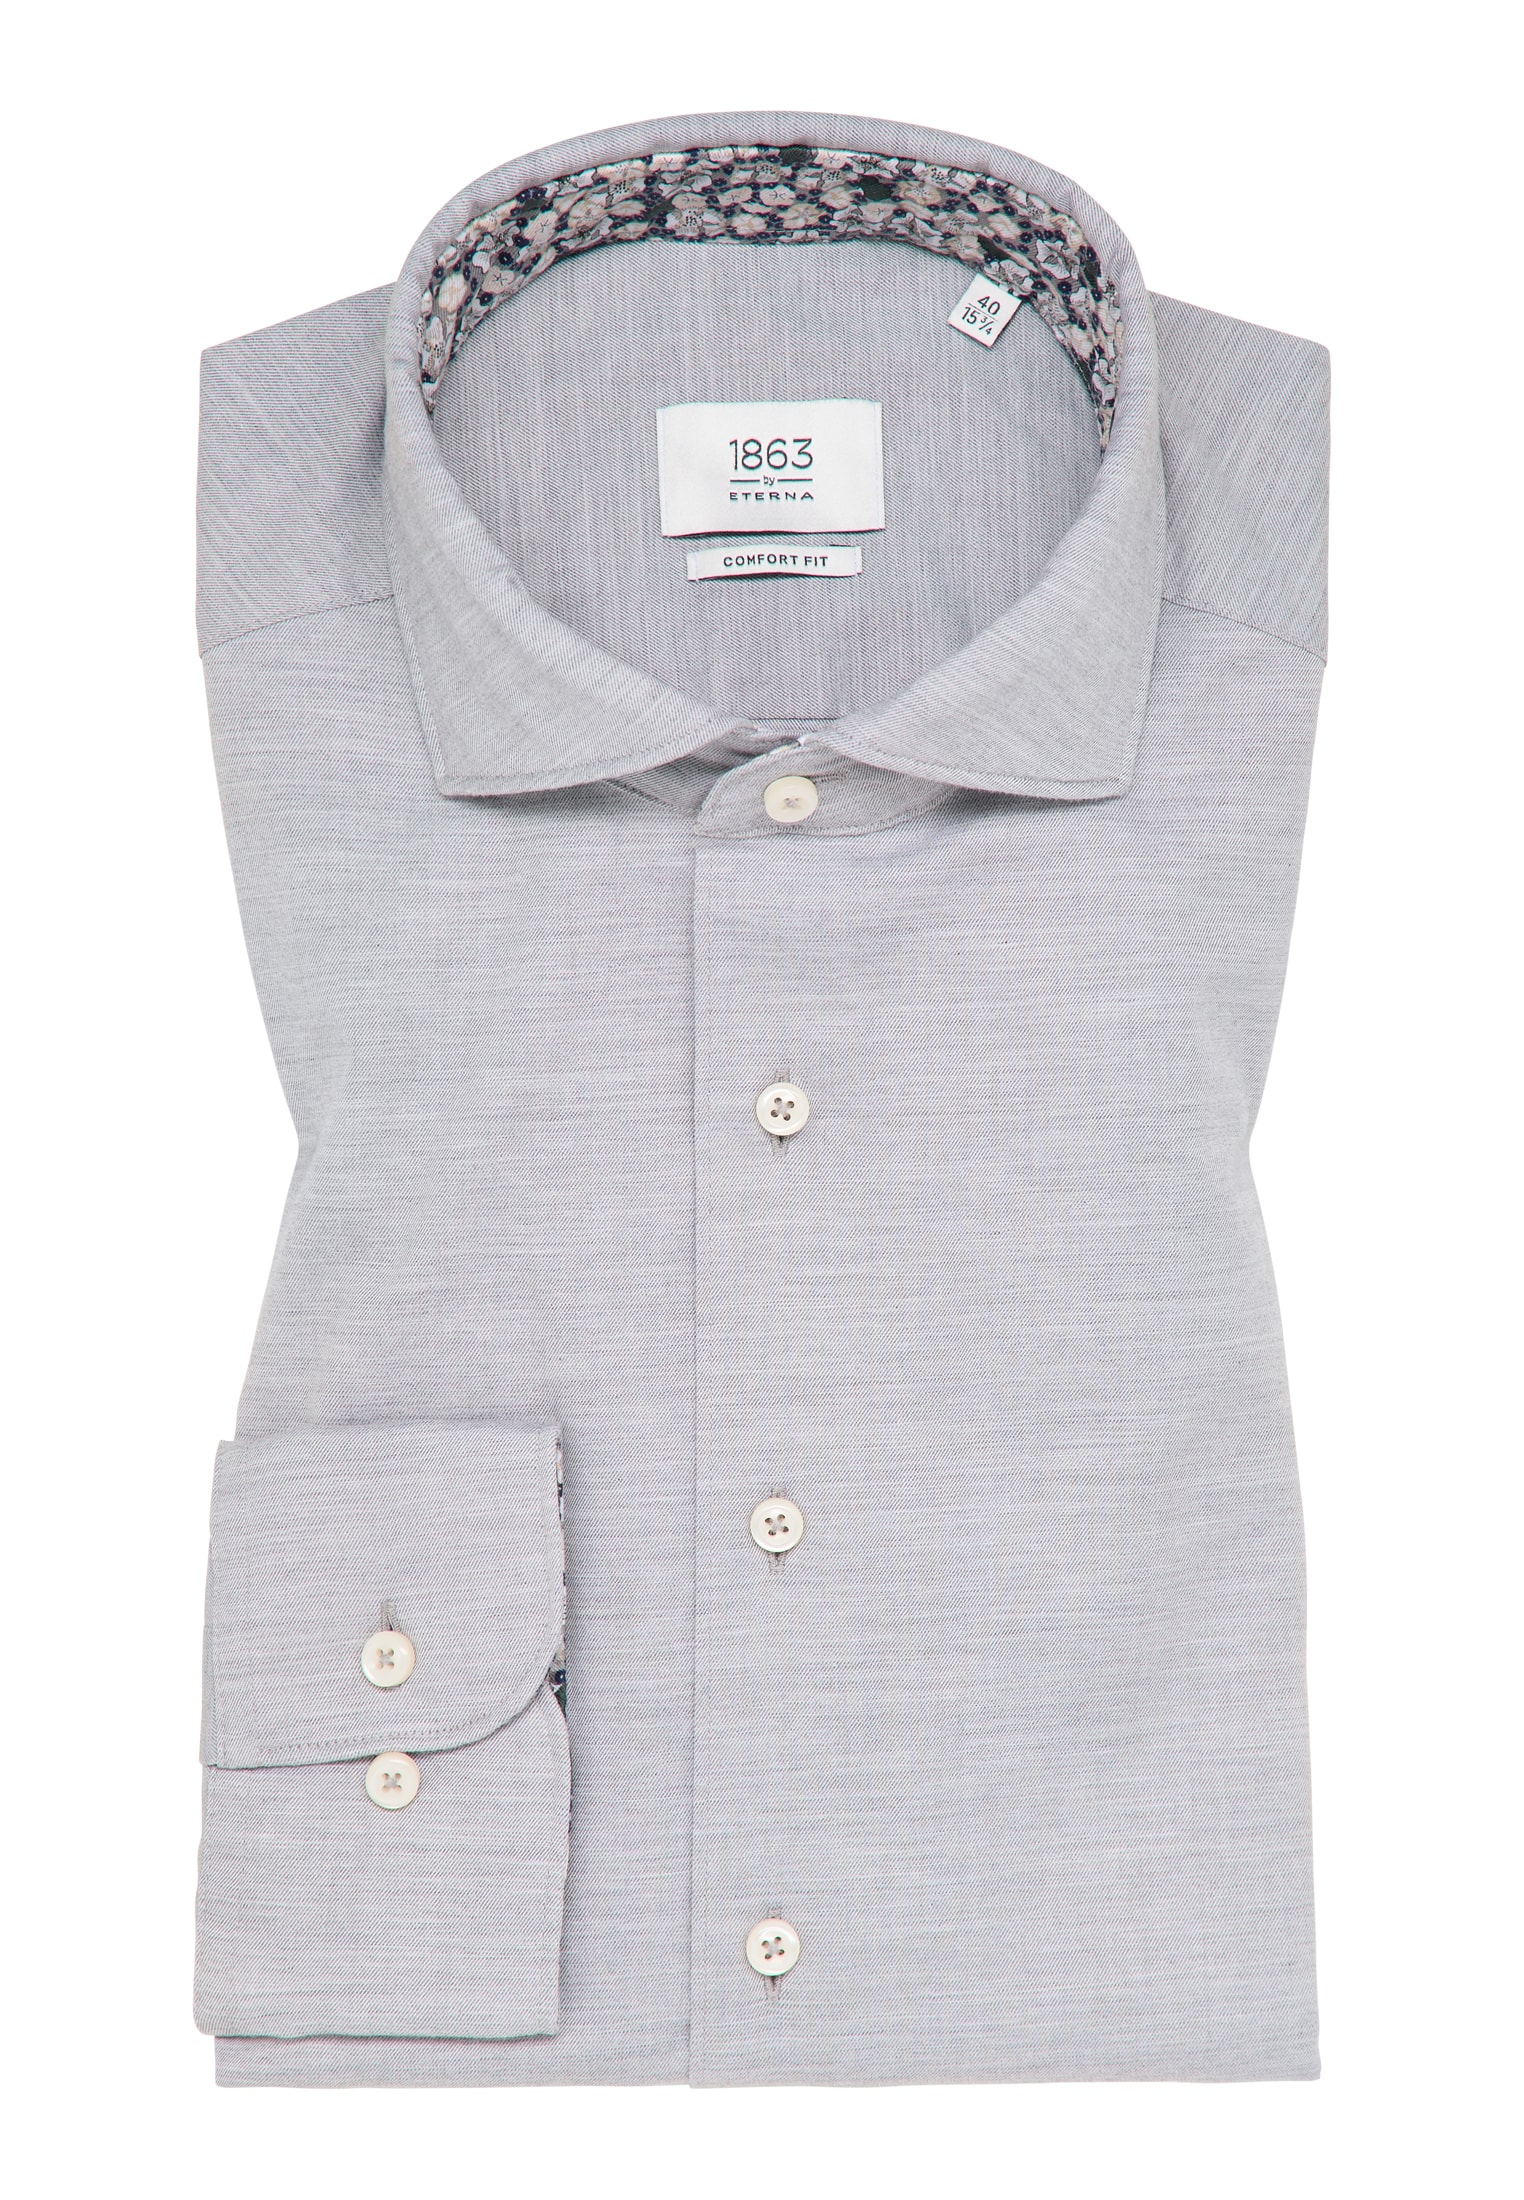 COMFORT FIT Soft Luxury Shirt in grau unifarben | grau | 44 | Langarm |  1SH12569-03-01-44-1/1